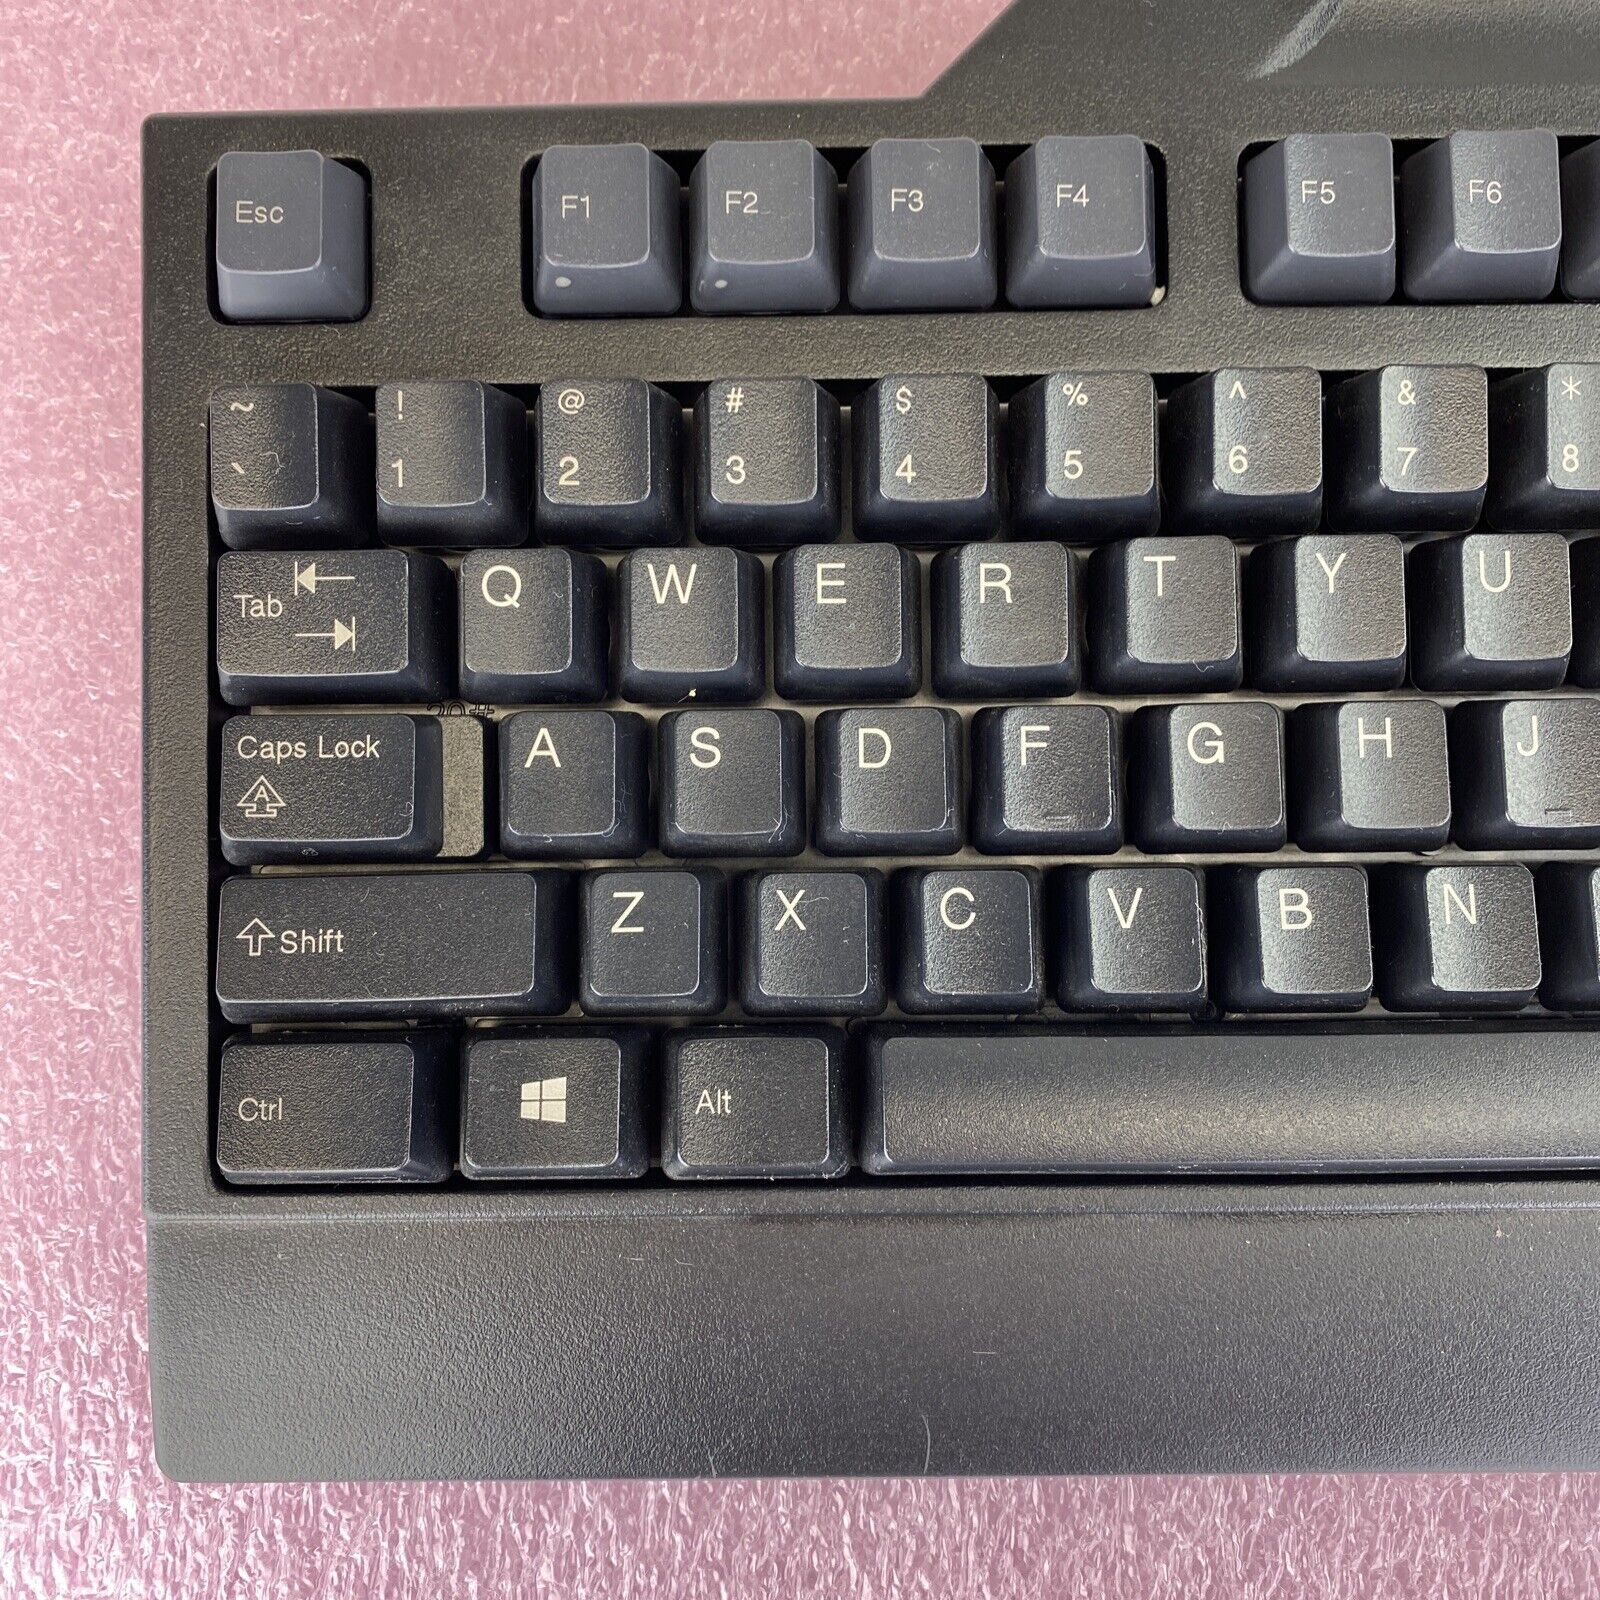 Lenovo SK-8825 Standard Keyboard USB wired Black tall quiet keys with pen holder